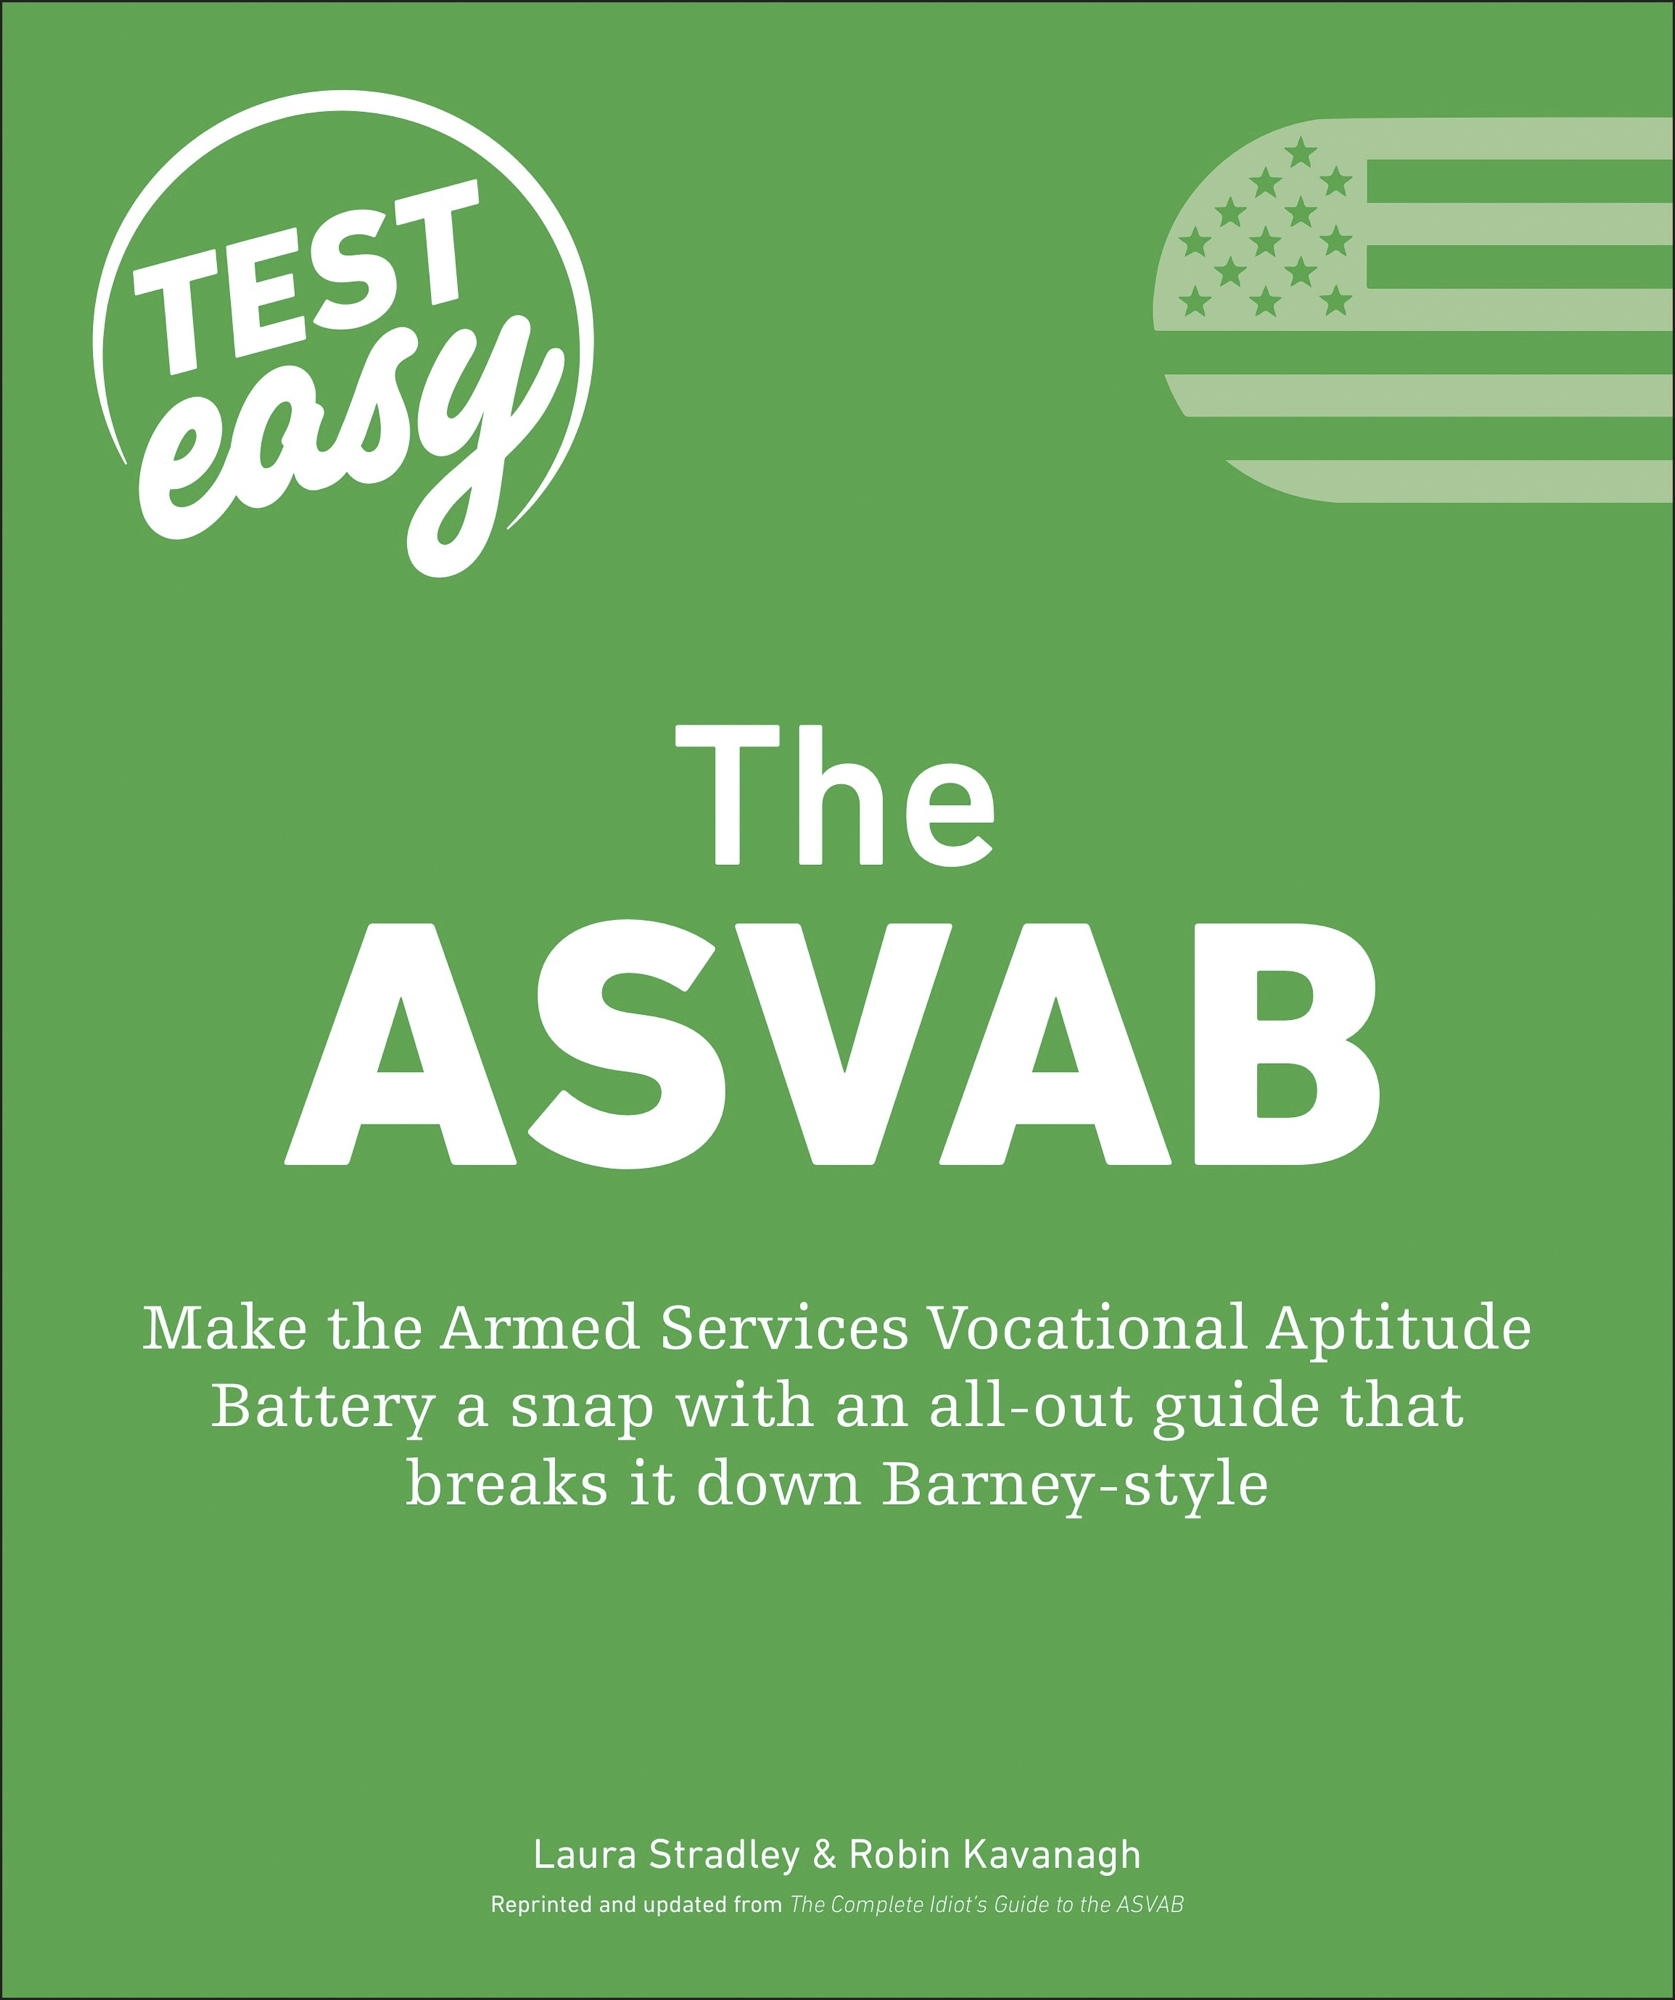 The ASVAB